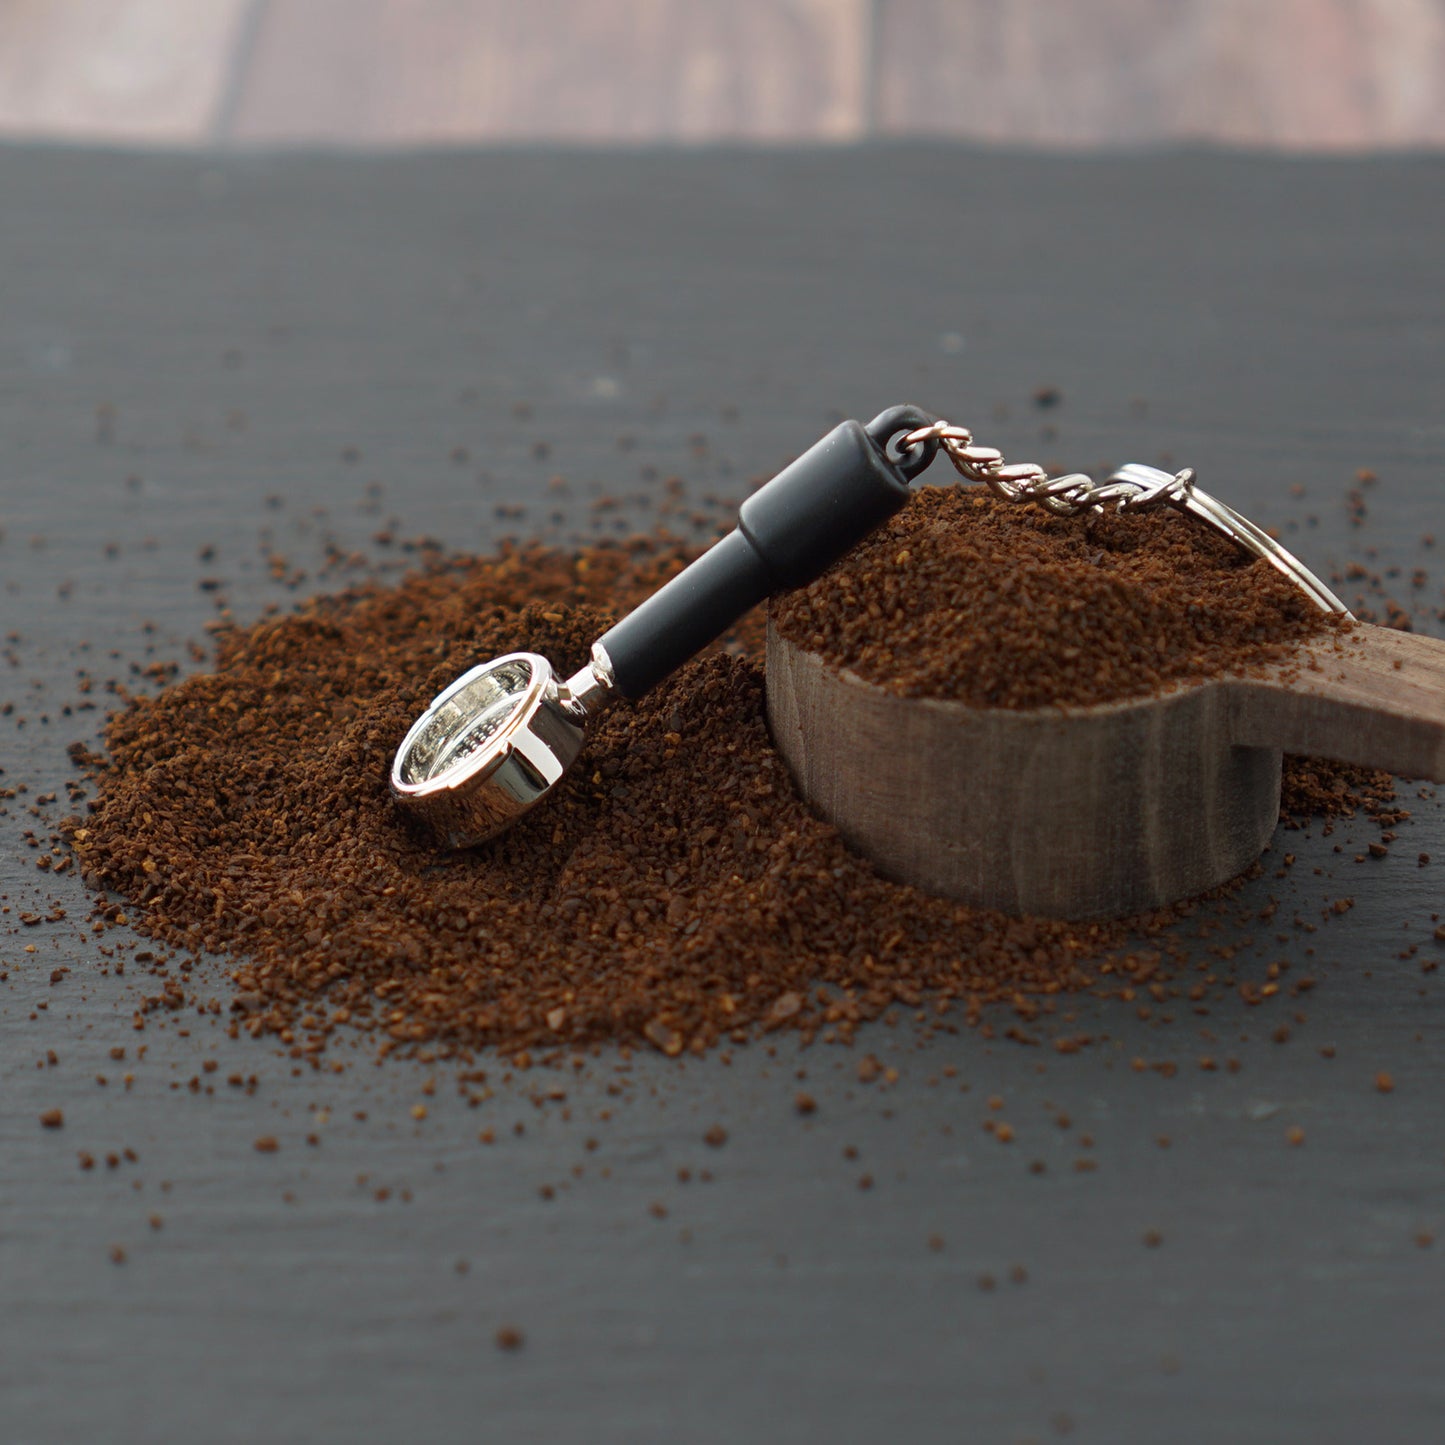 Coffee Gear Miniature Keychains